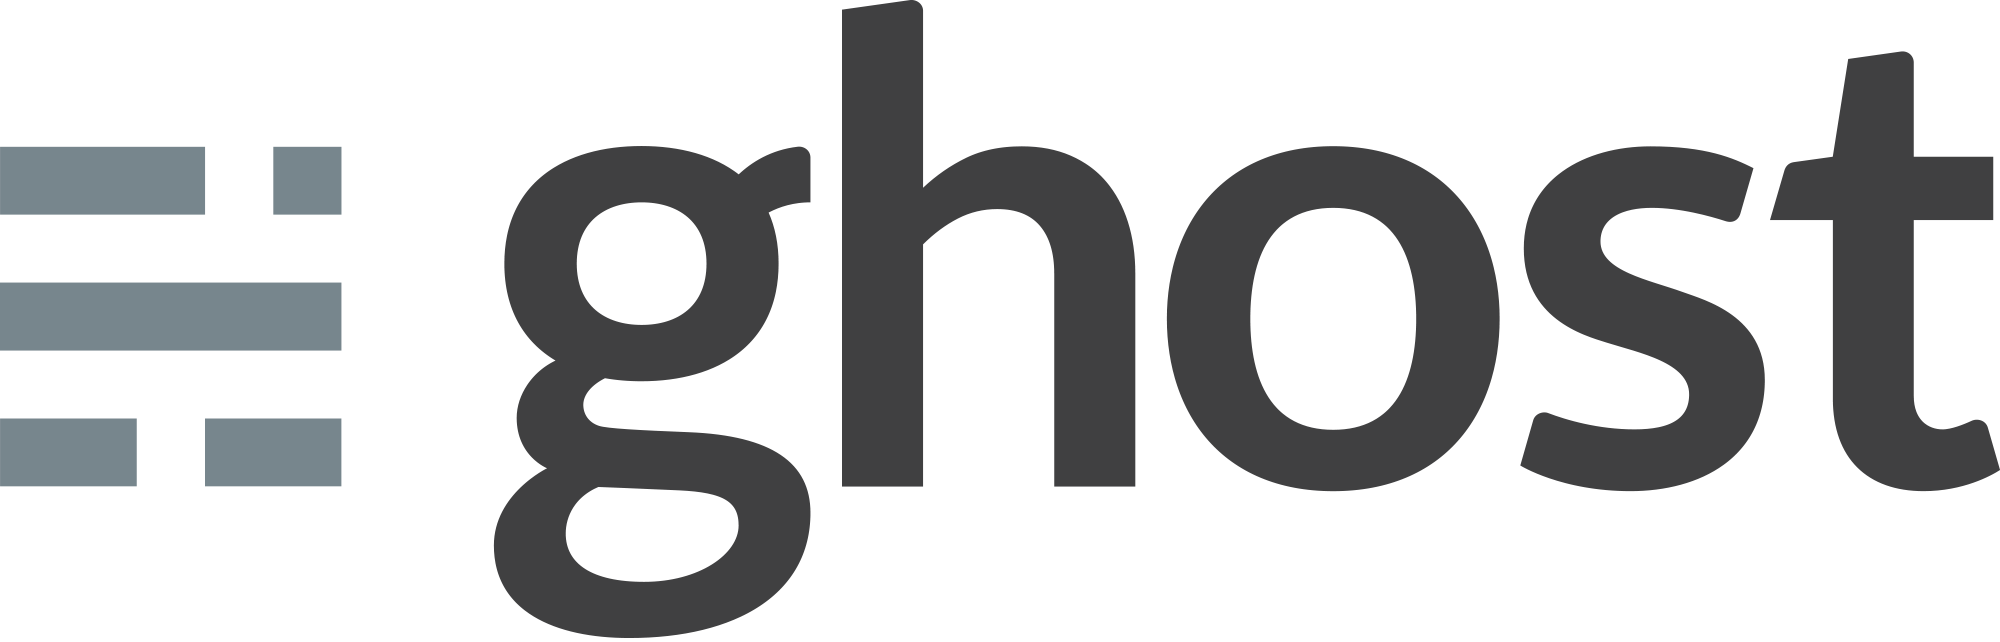 White Ghost Logo - Ghost-Logo | bennybennet